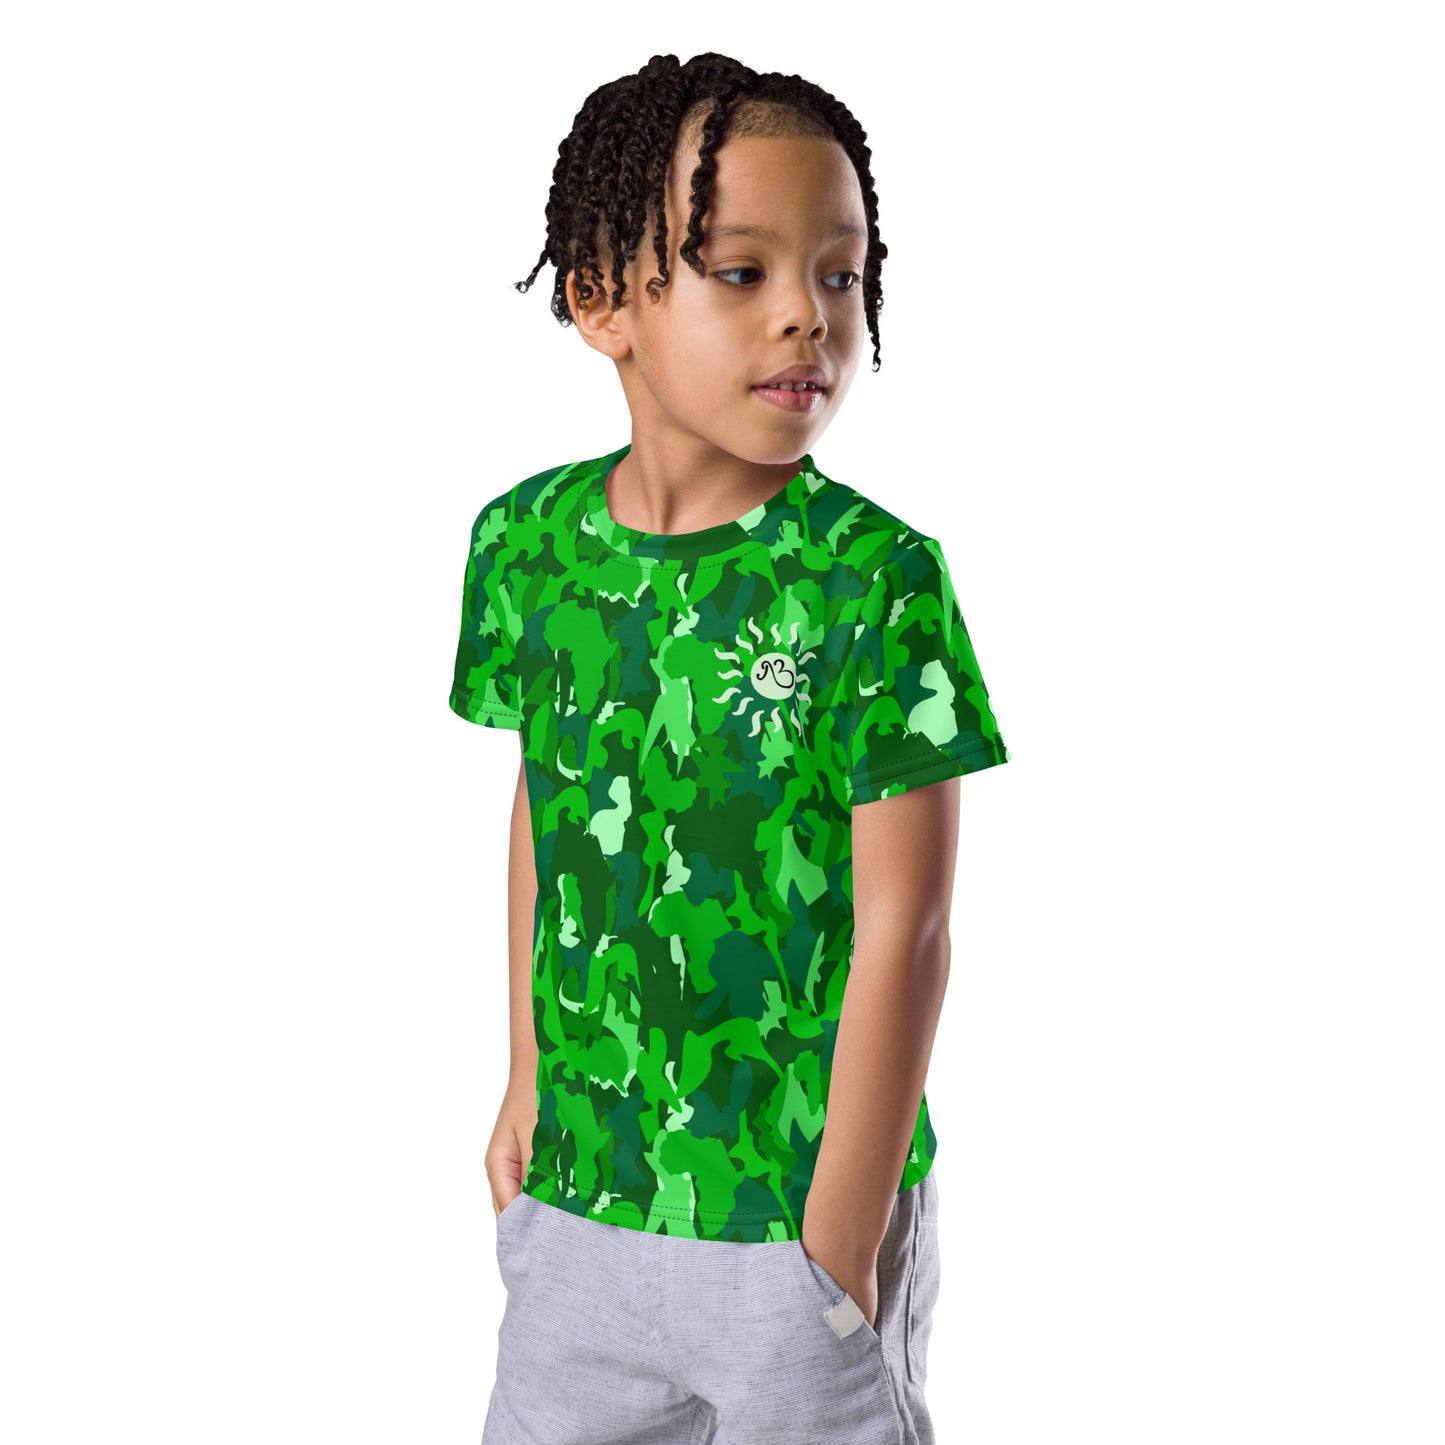 AfriBix Camo Kids crew neck t-shirt - Green